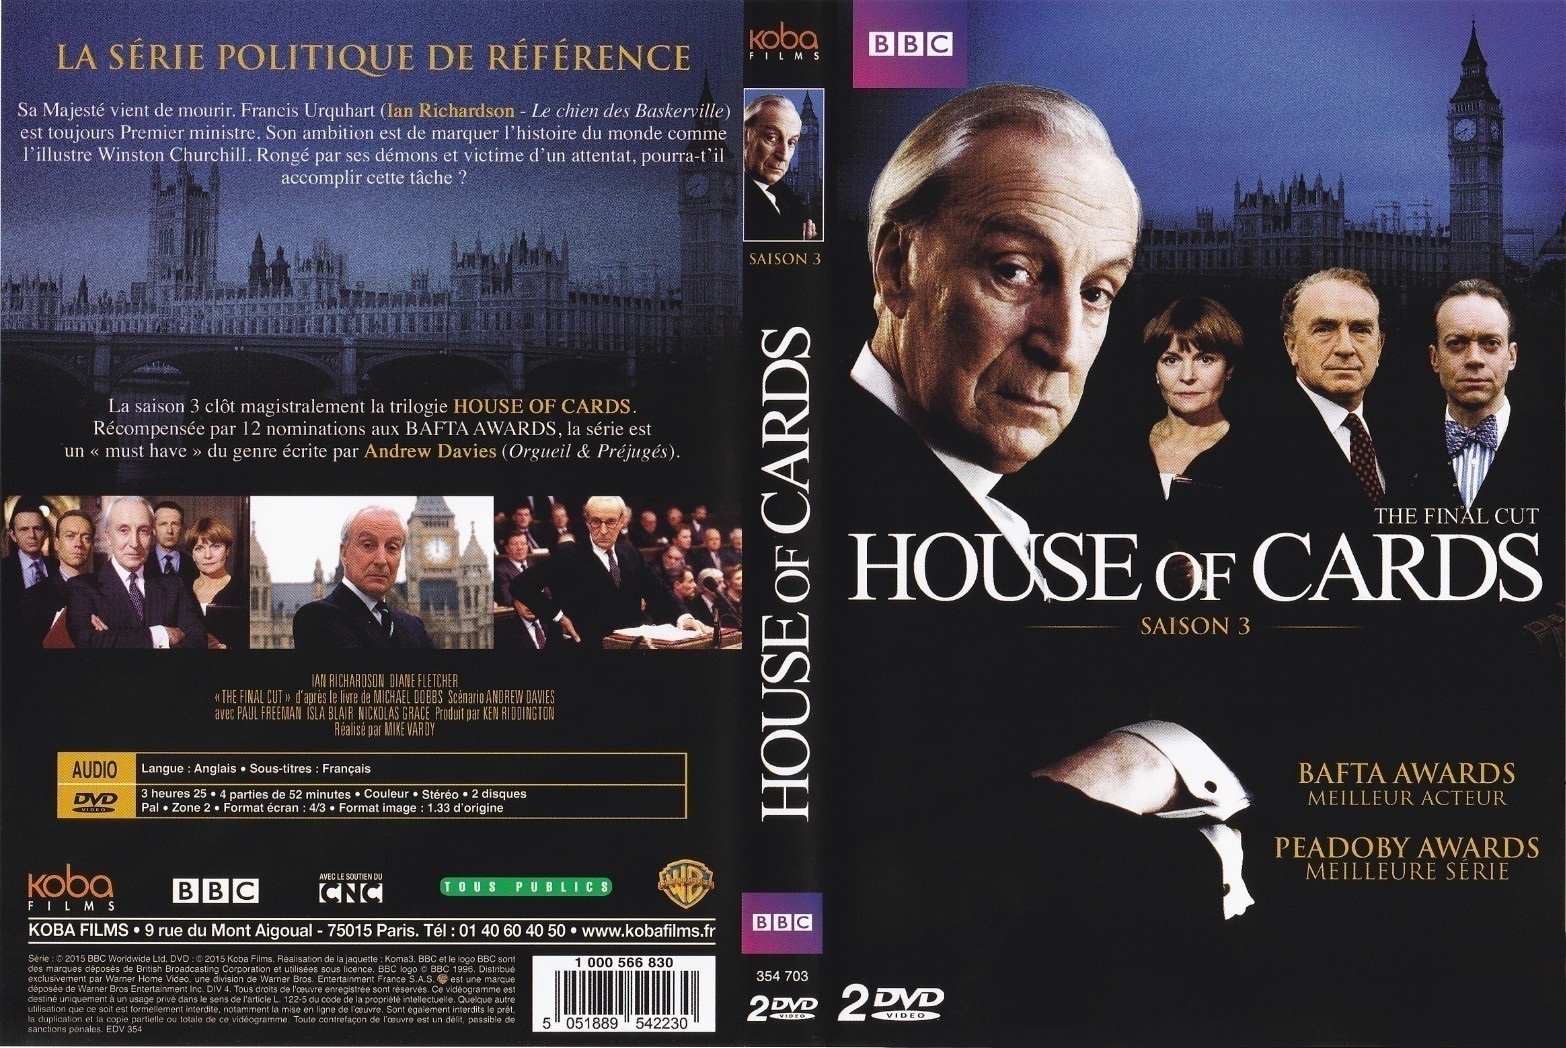 Jaquette DVD House of Cards Saison 3 (UK)